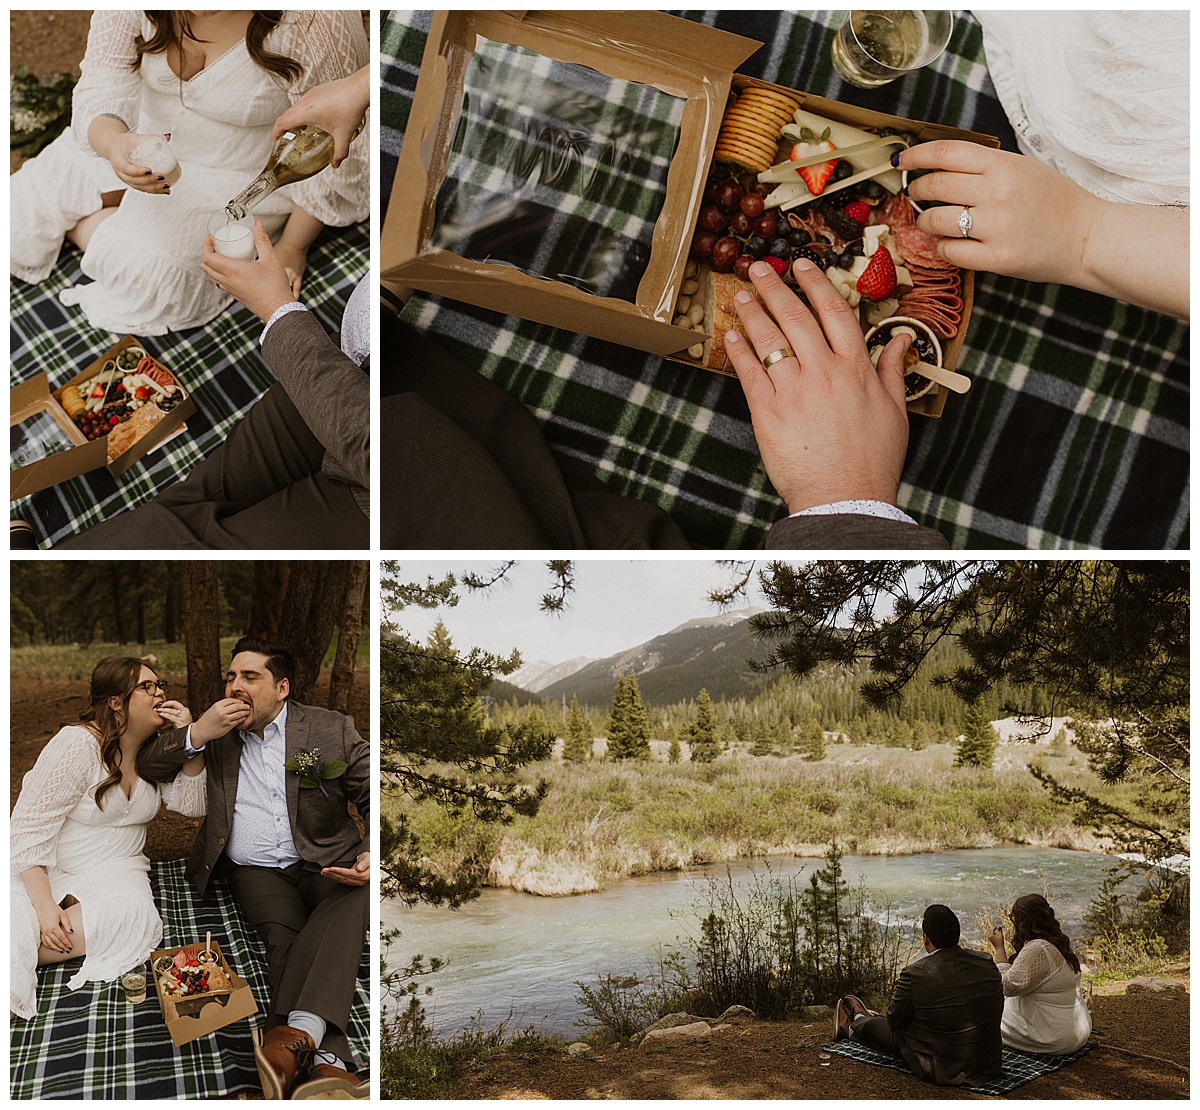 A couple enjoys a picnic along a river after their Breckenridge elopement.